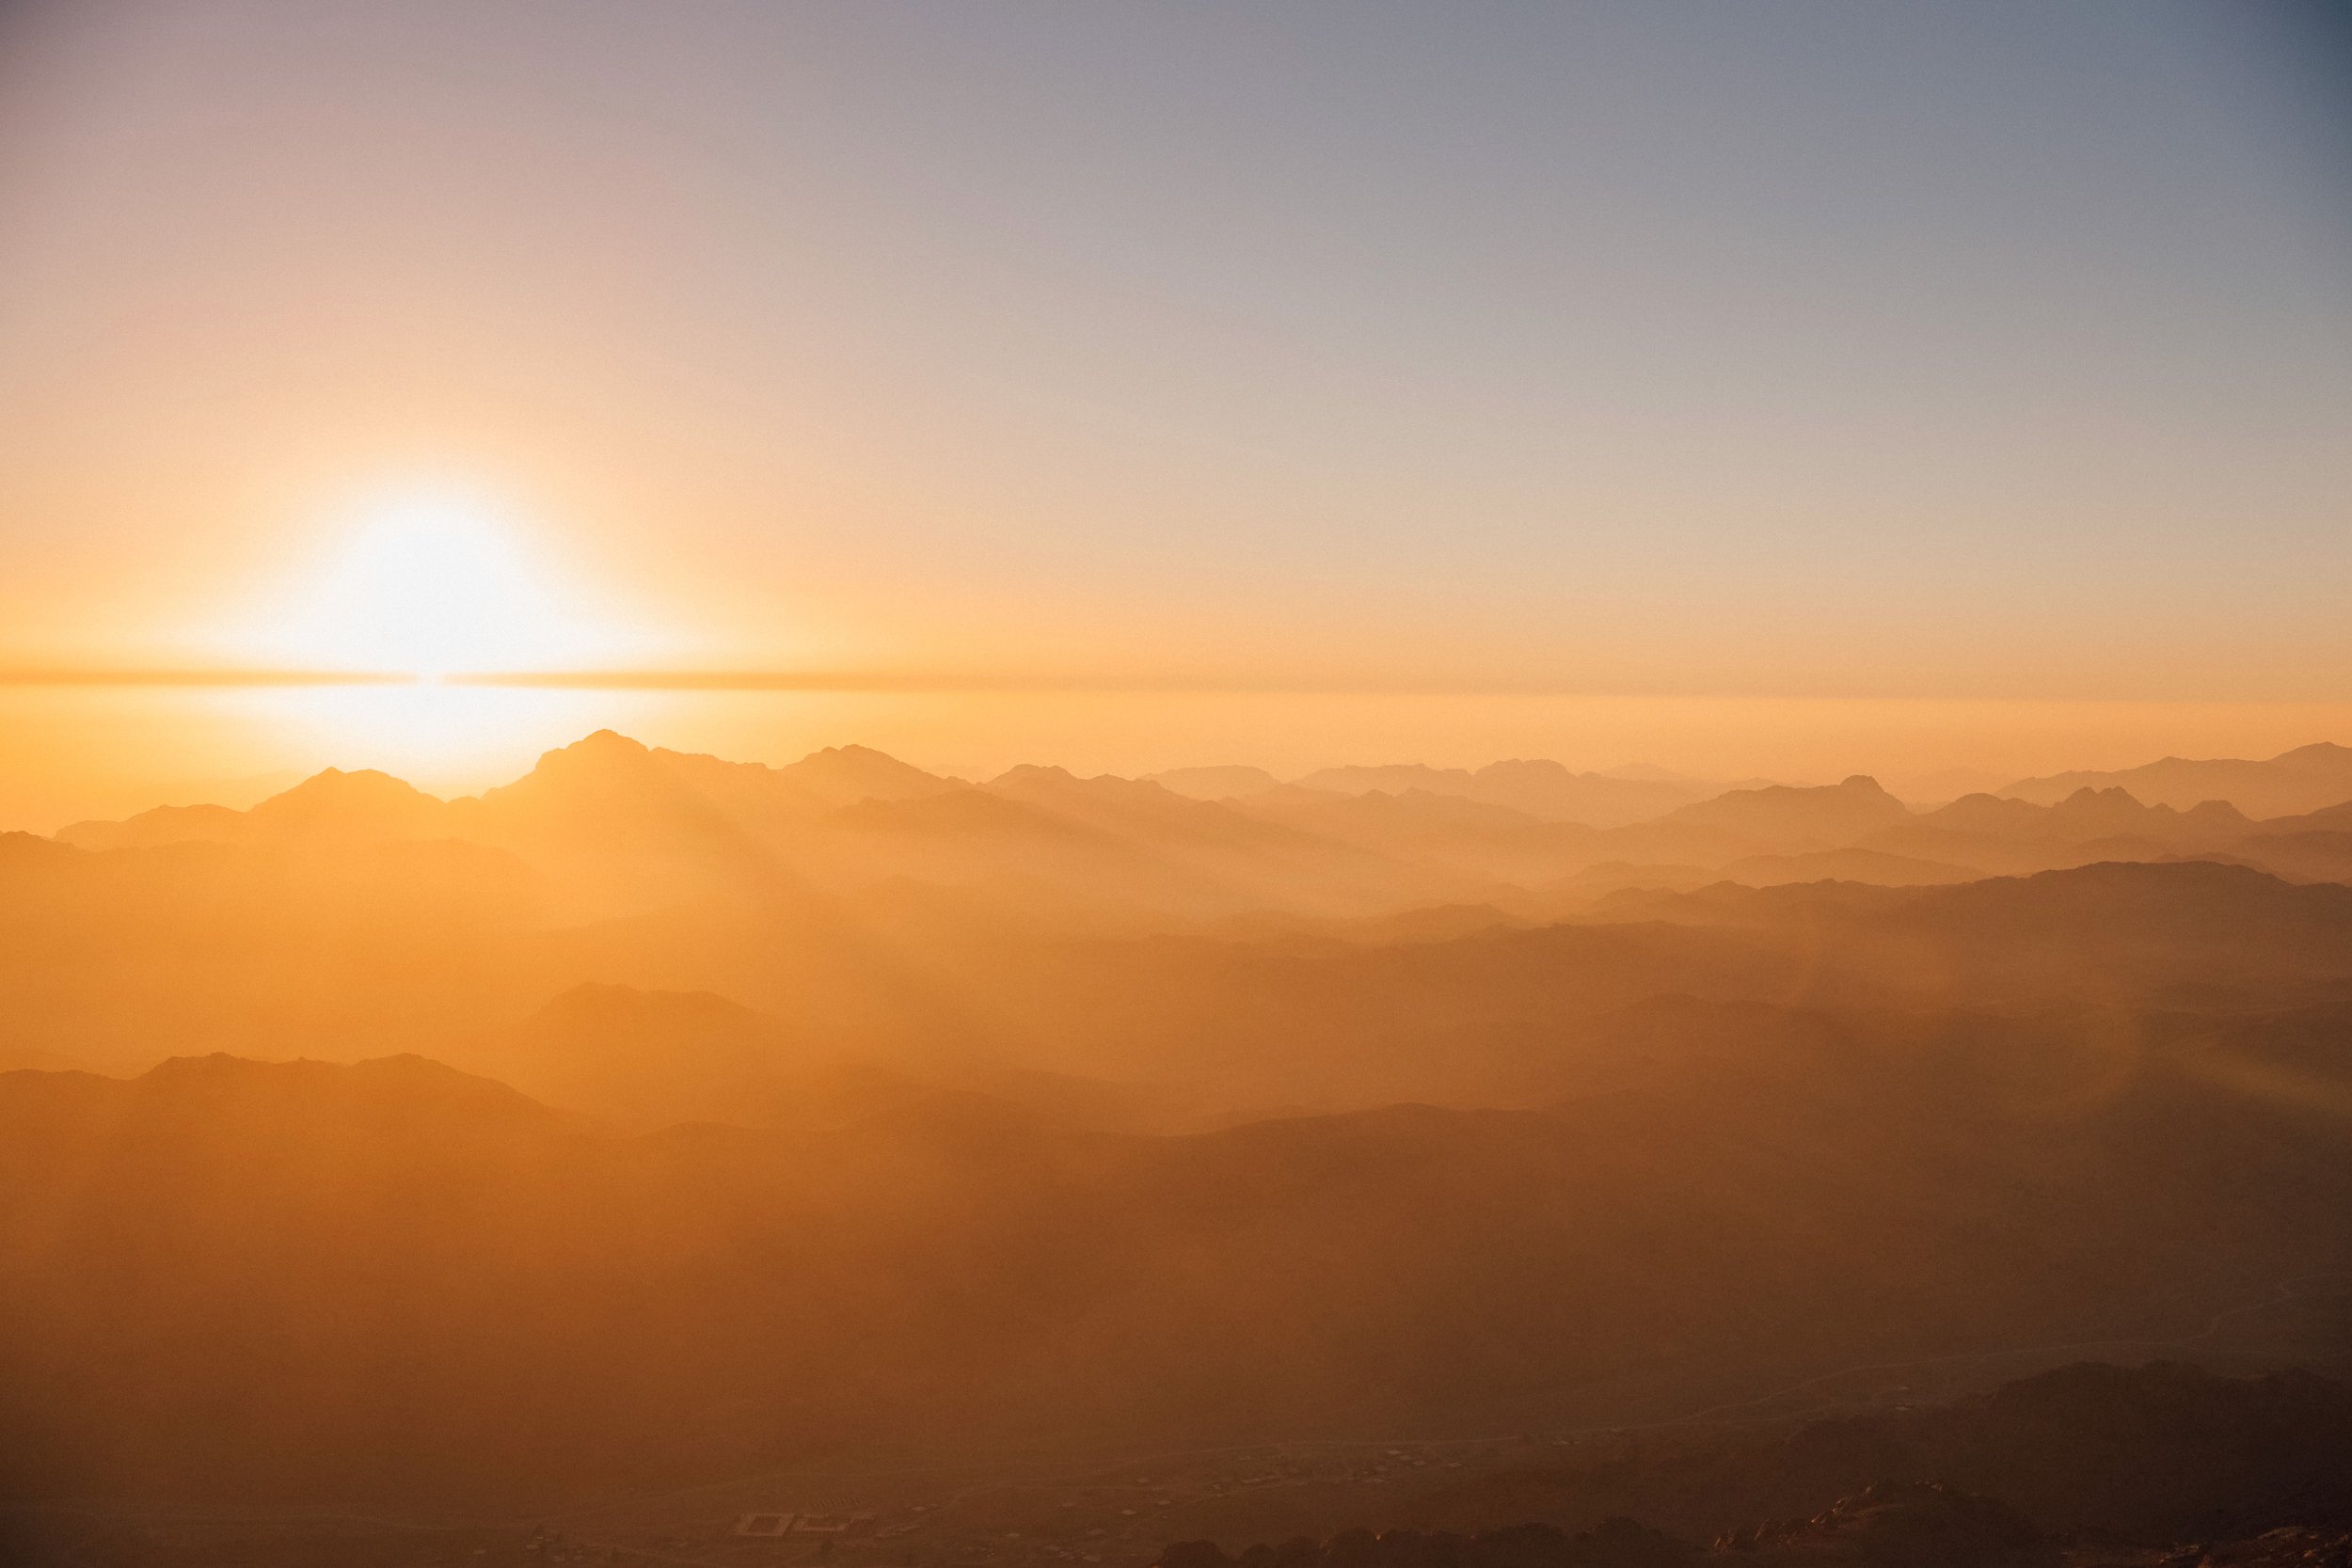 Incredible sunrise after a challenging night hike of Mount Sinai - Sinai Peninsula - Egypt